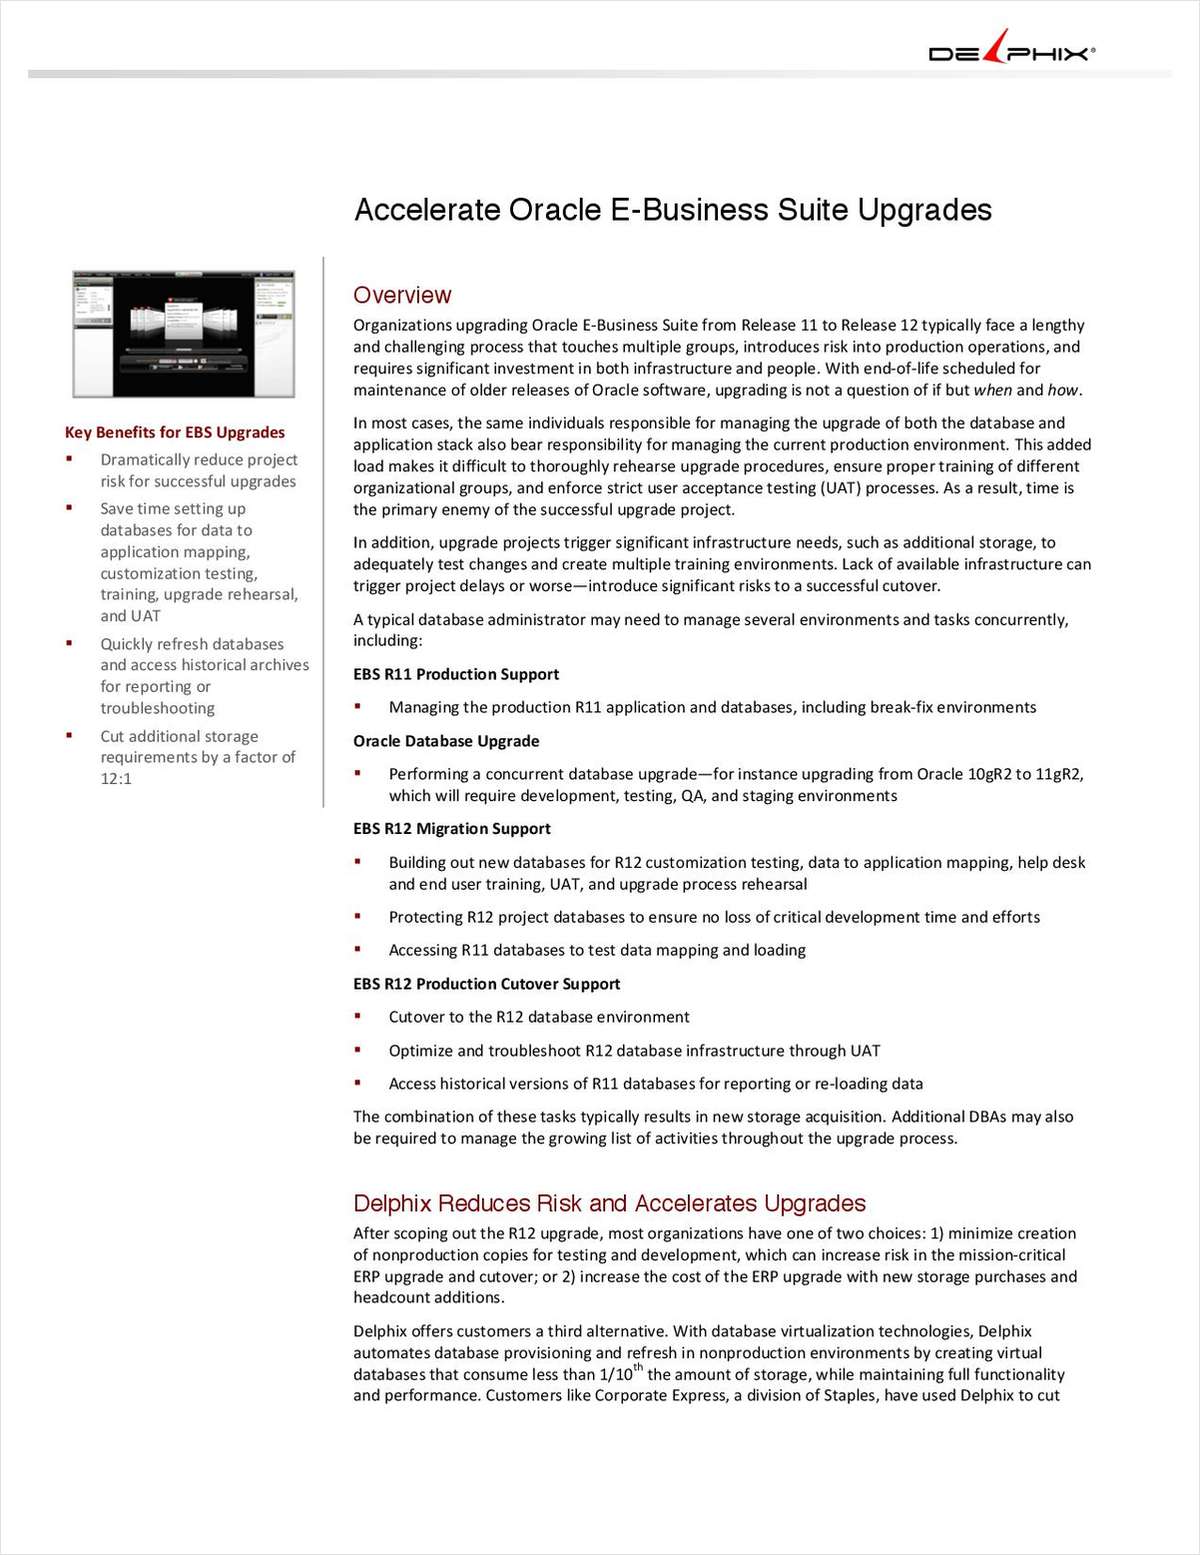 Accelerate, De-risk Oracle EBS Upgrades